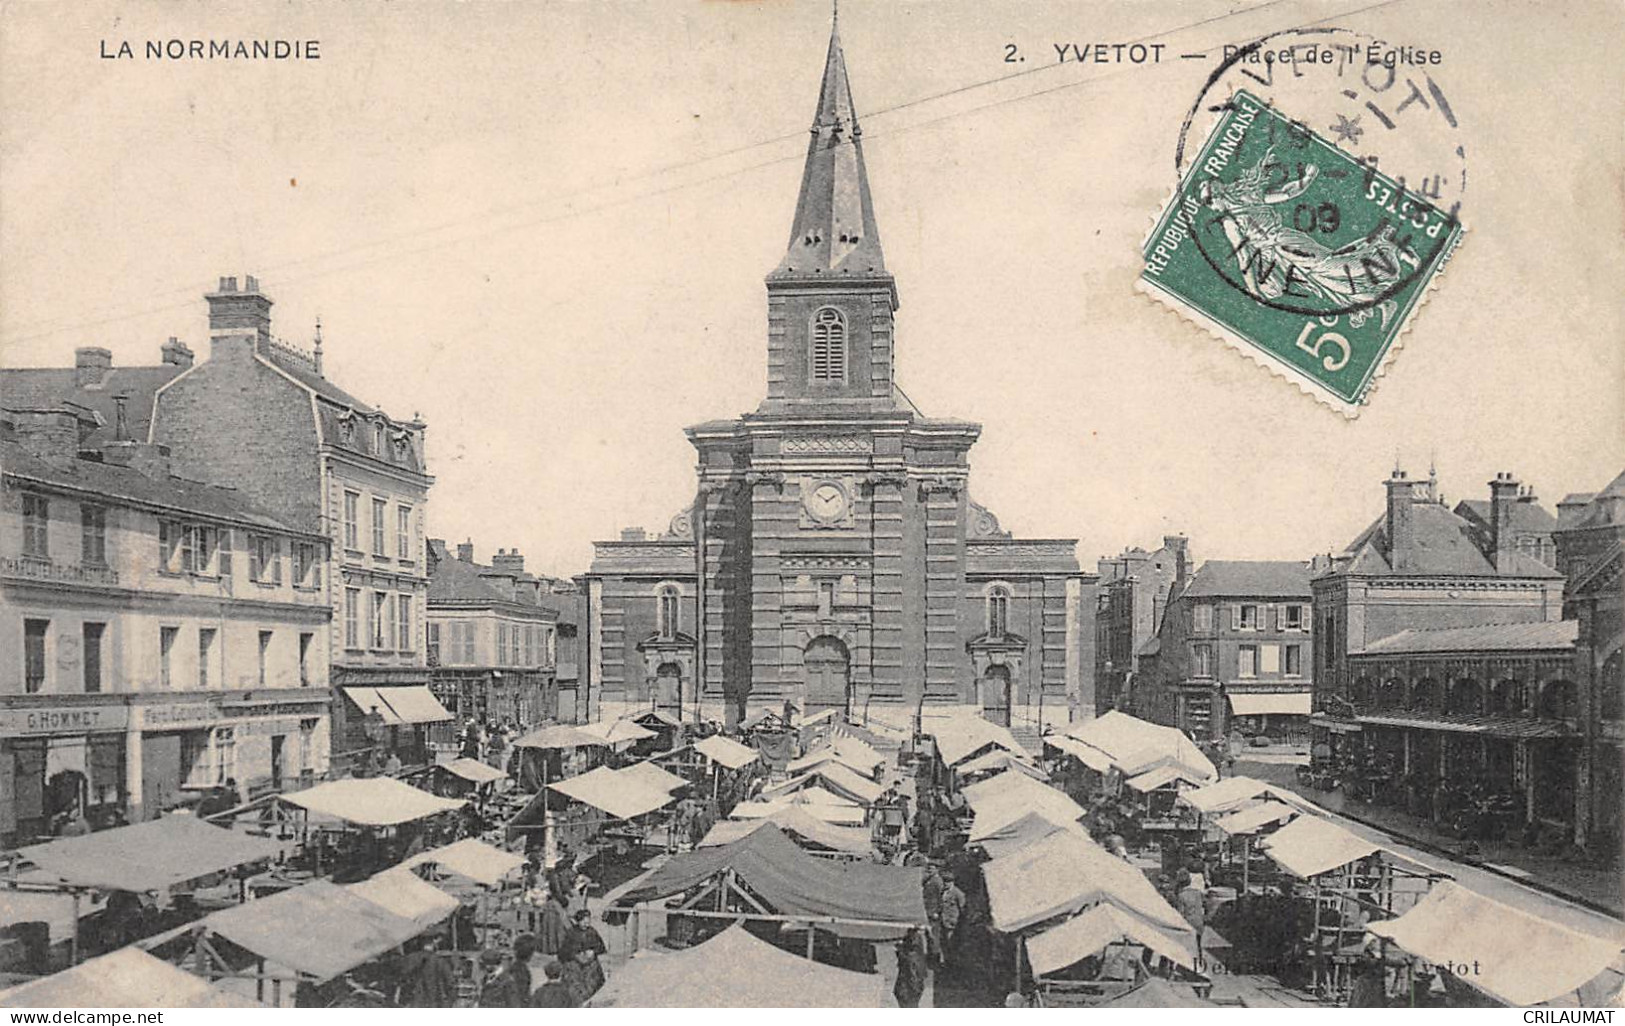 76-YVETOT-Marché Place De L'eglise-N 6002-C/0033 - Yvetot